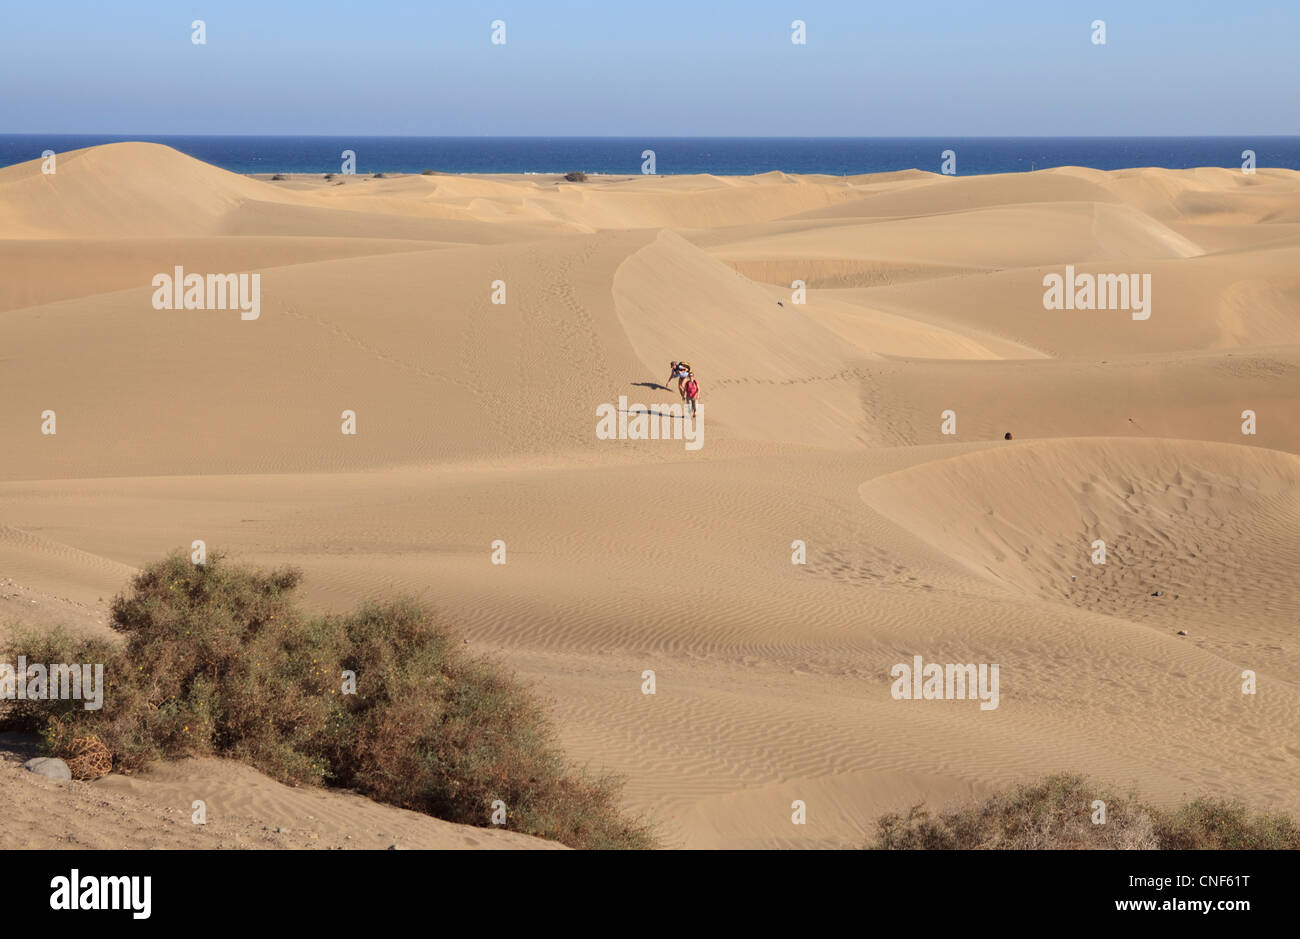 People walking on sand dunes Stock Photo